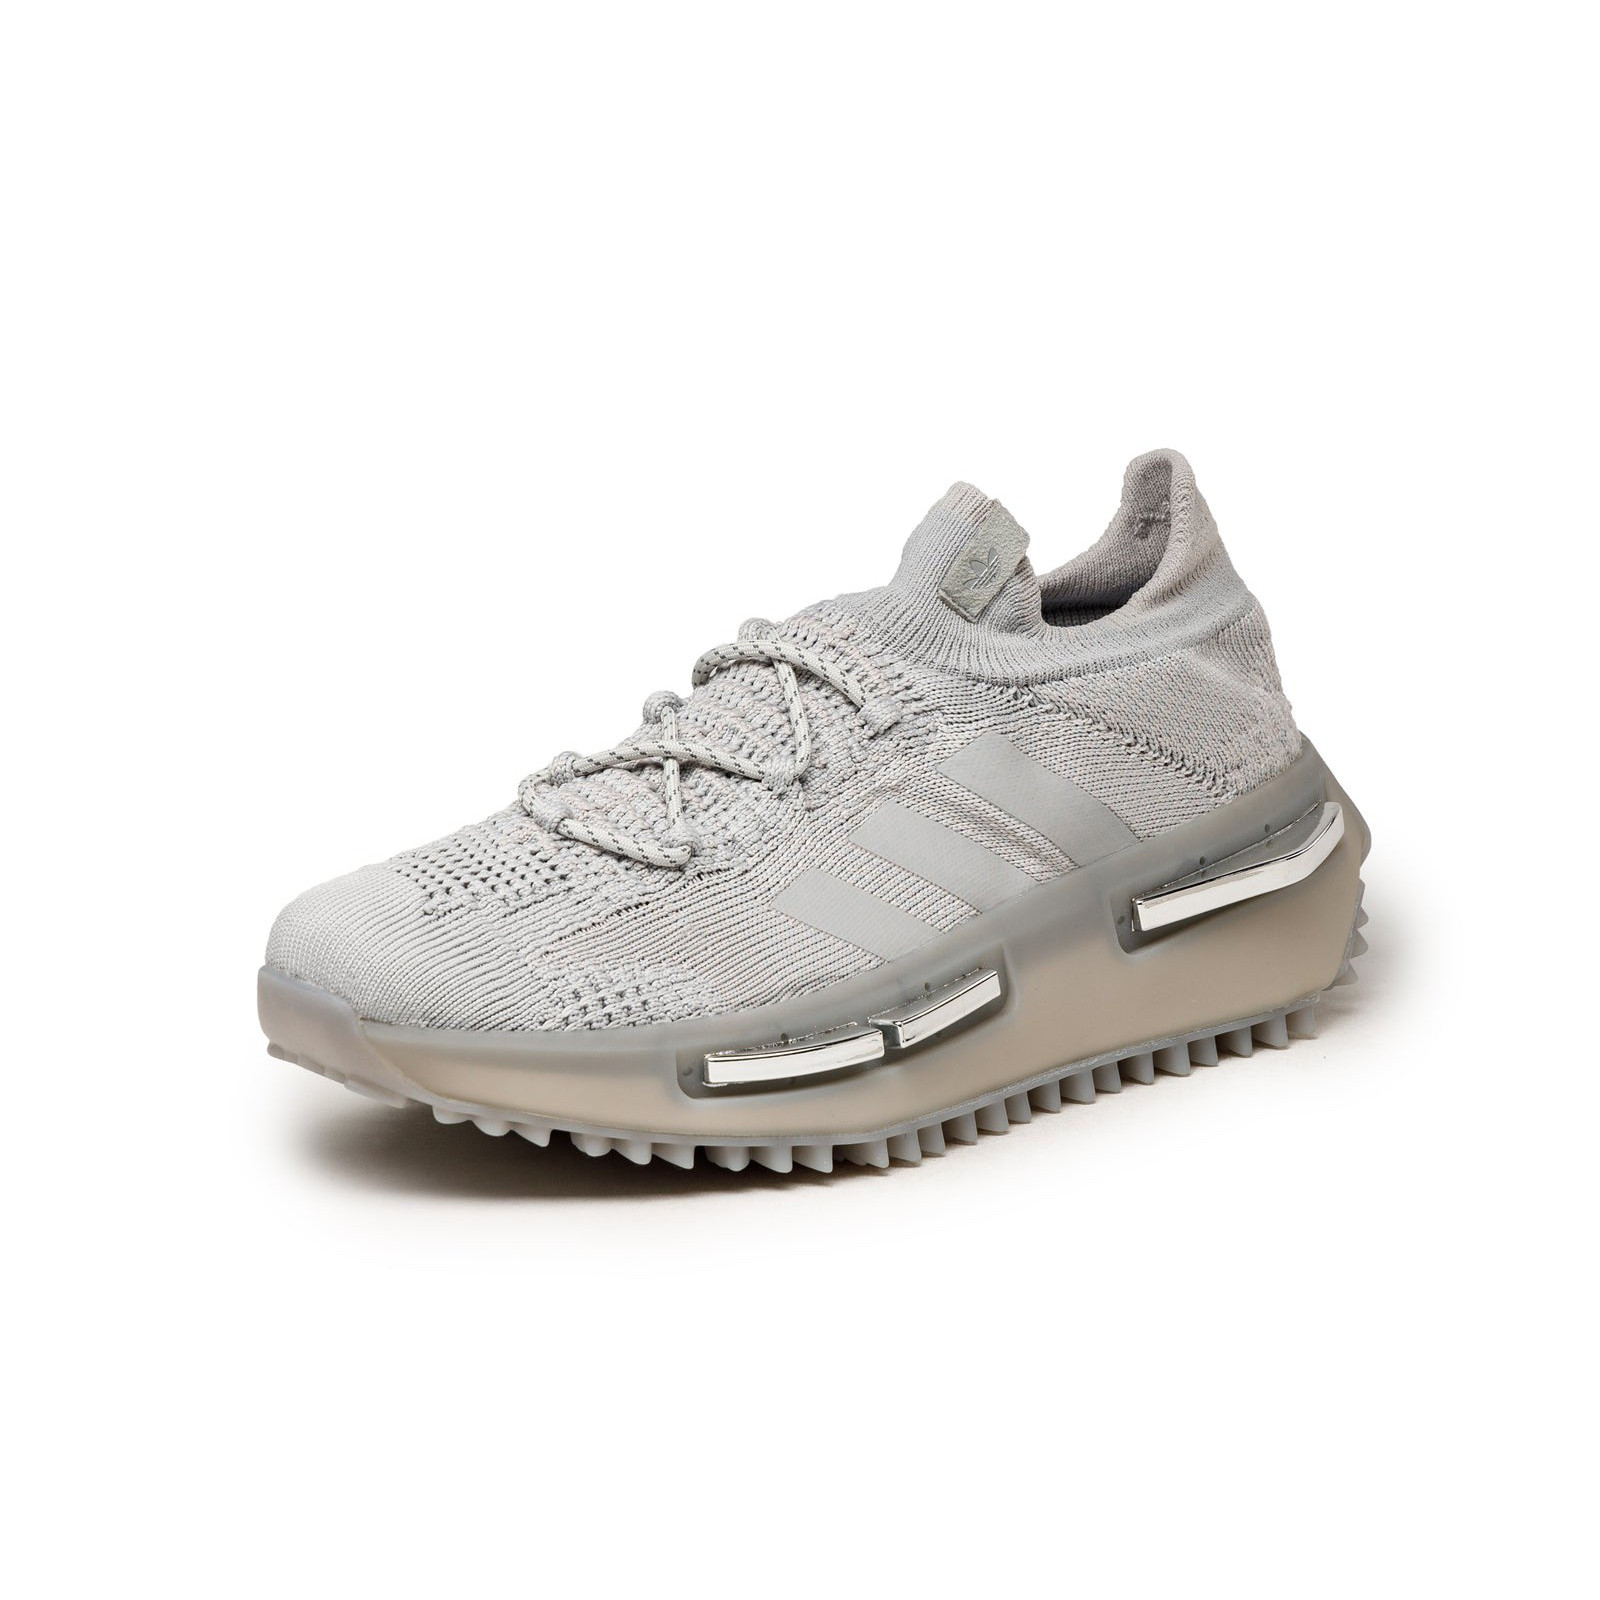 Adidas NMD_S1
Grey / Silver Metallic